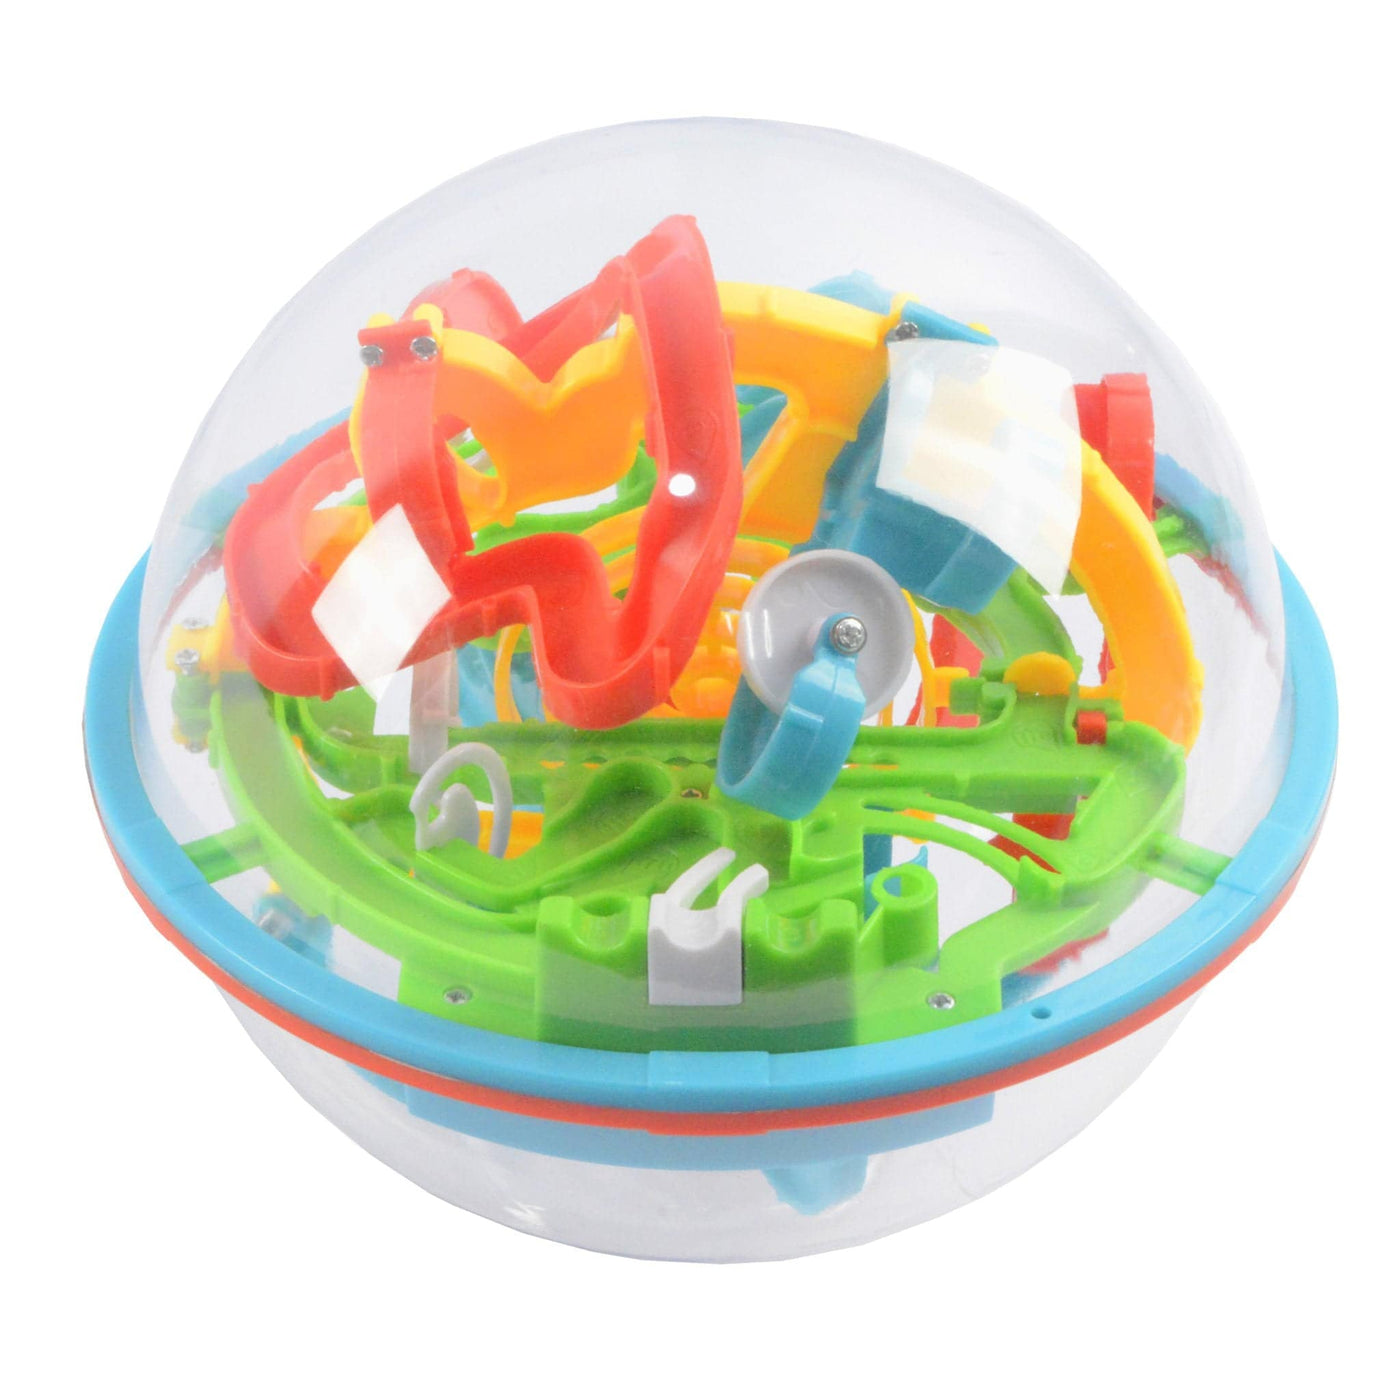 MAZE CHALLENGE BALL - Maze Ball Game - Discovery Toys